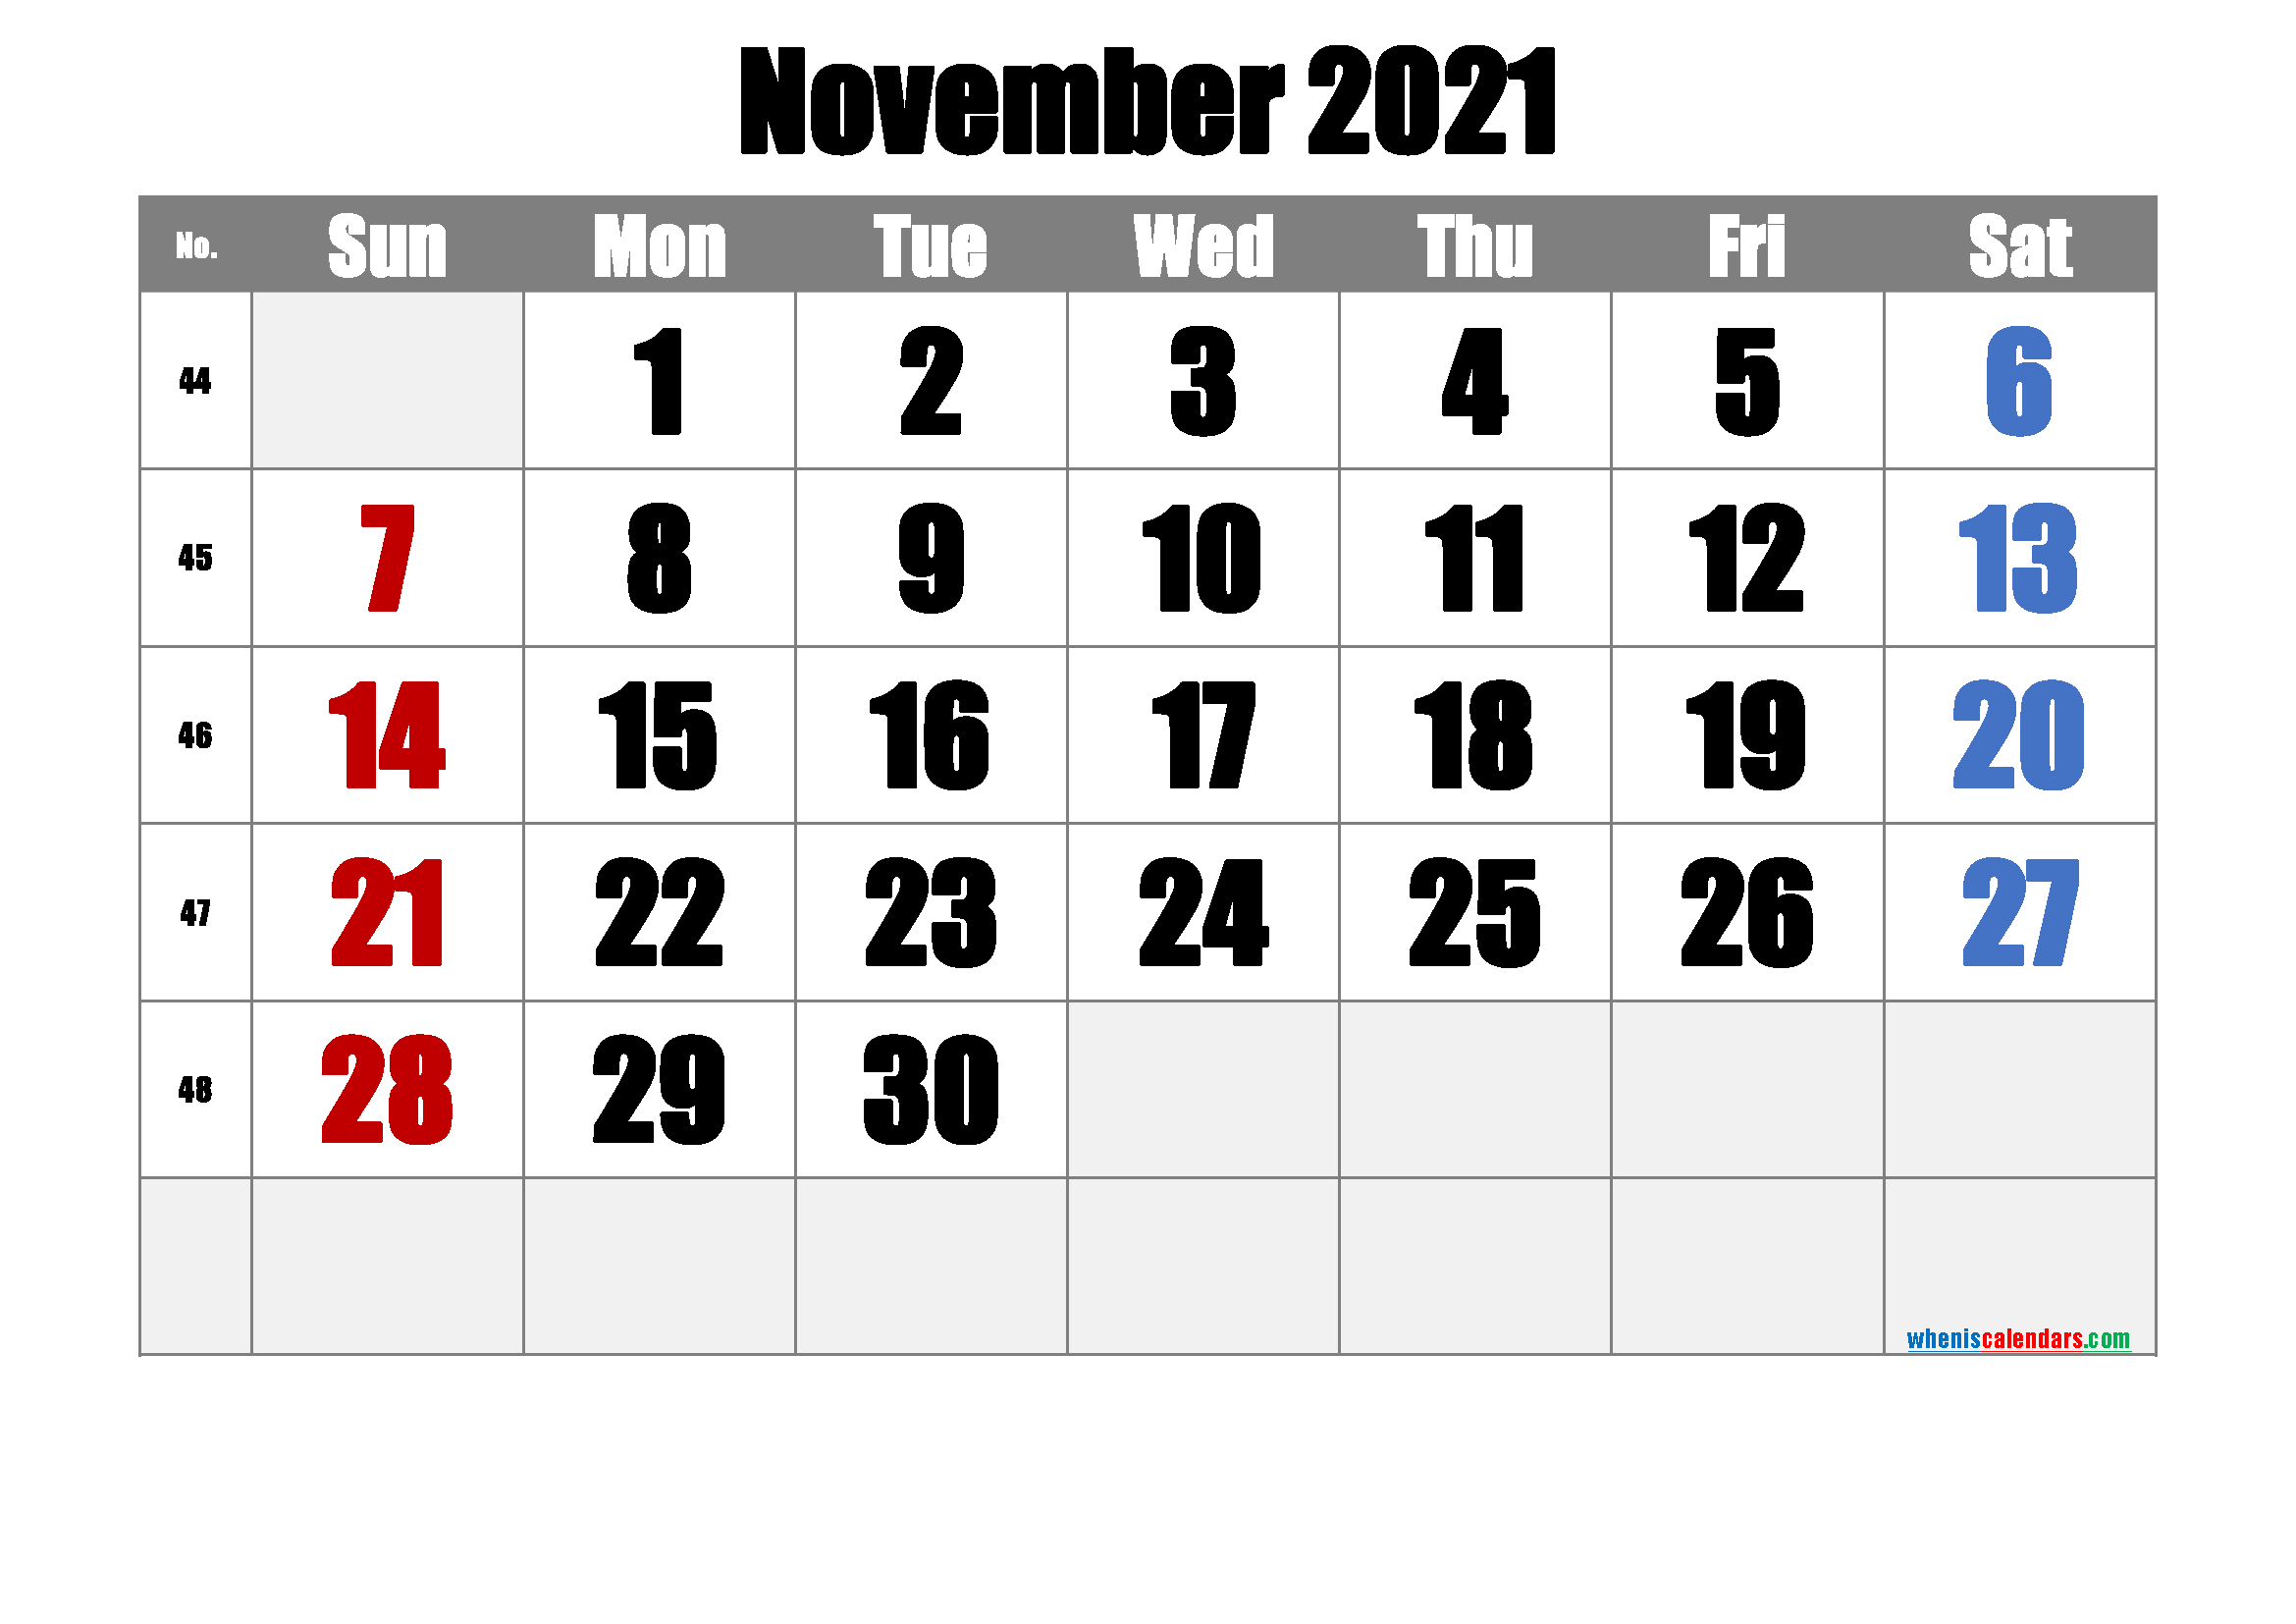 2021 November Calendar Free Printable | Example Calendar November 2021 Calendar Printable Free